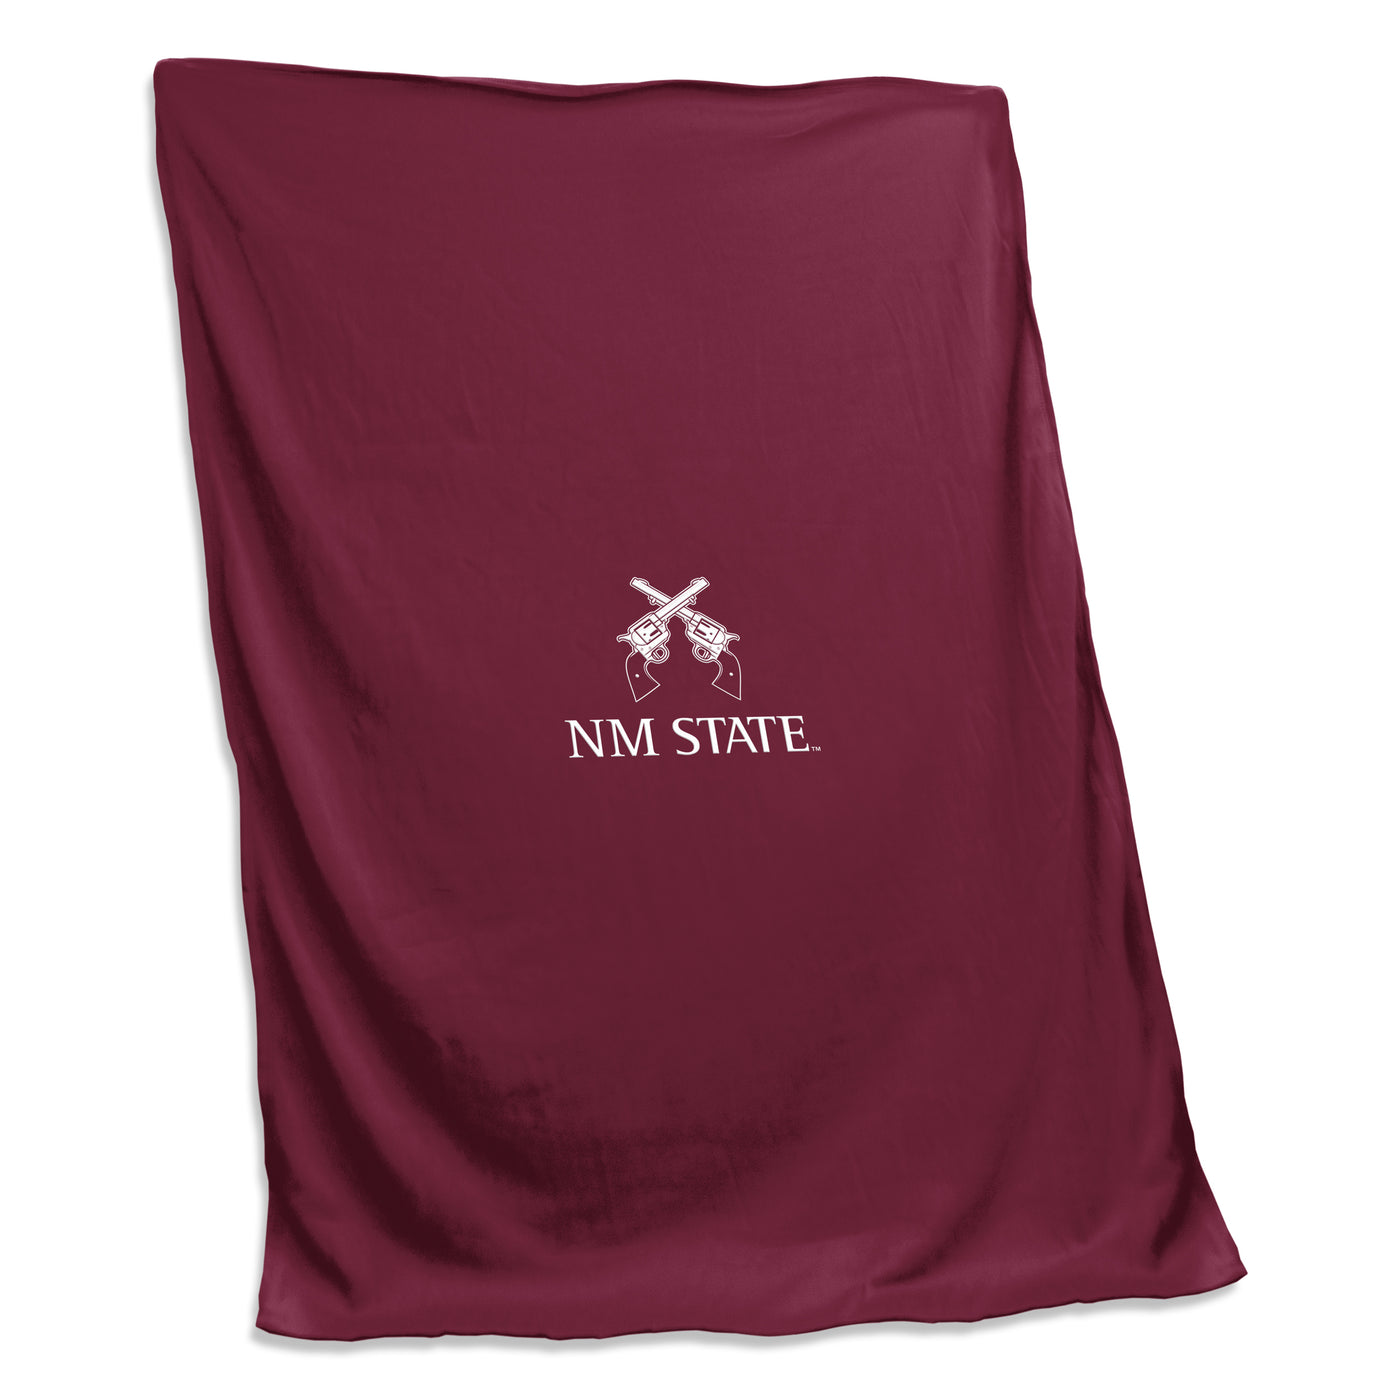 NM State Screened  Sweatshirt Blanket